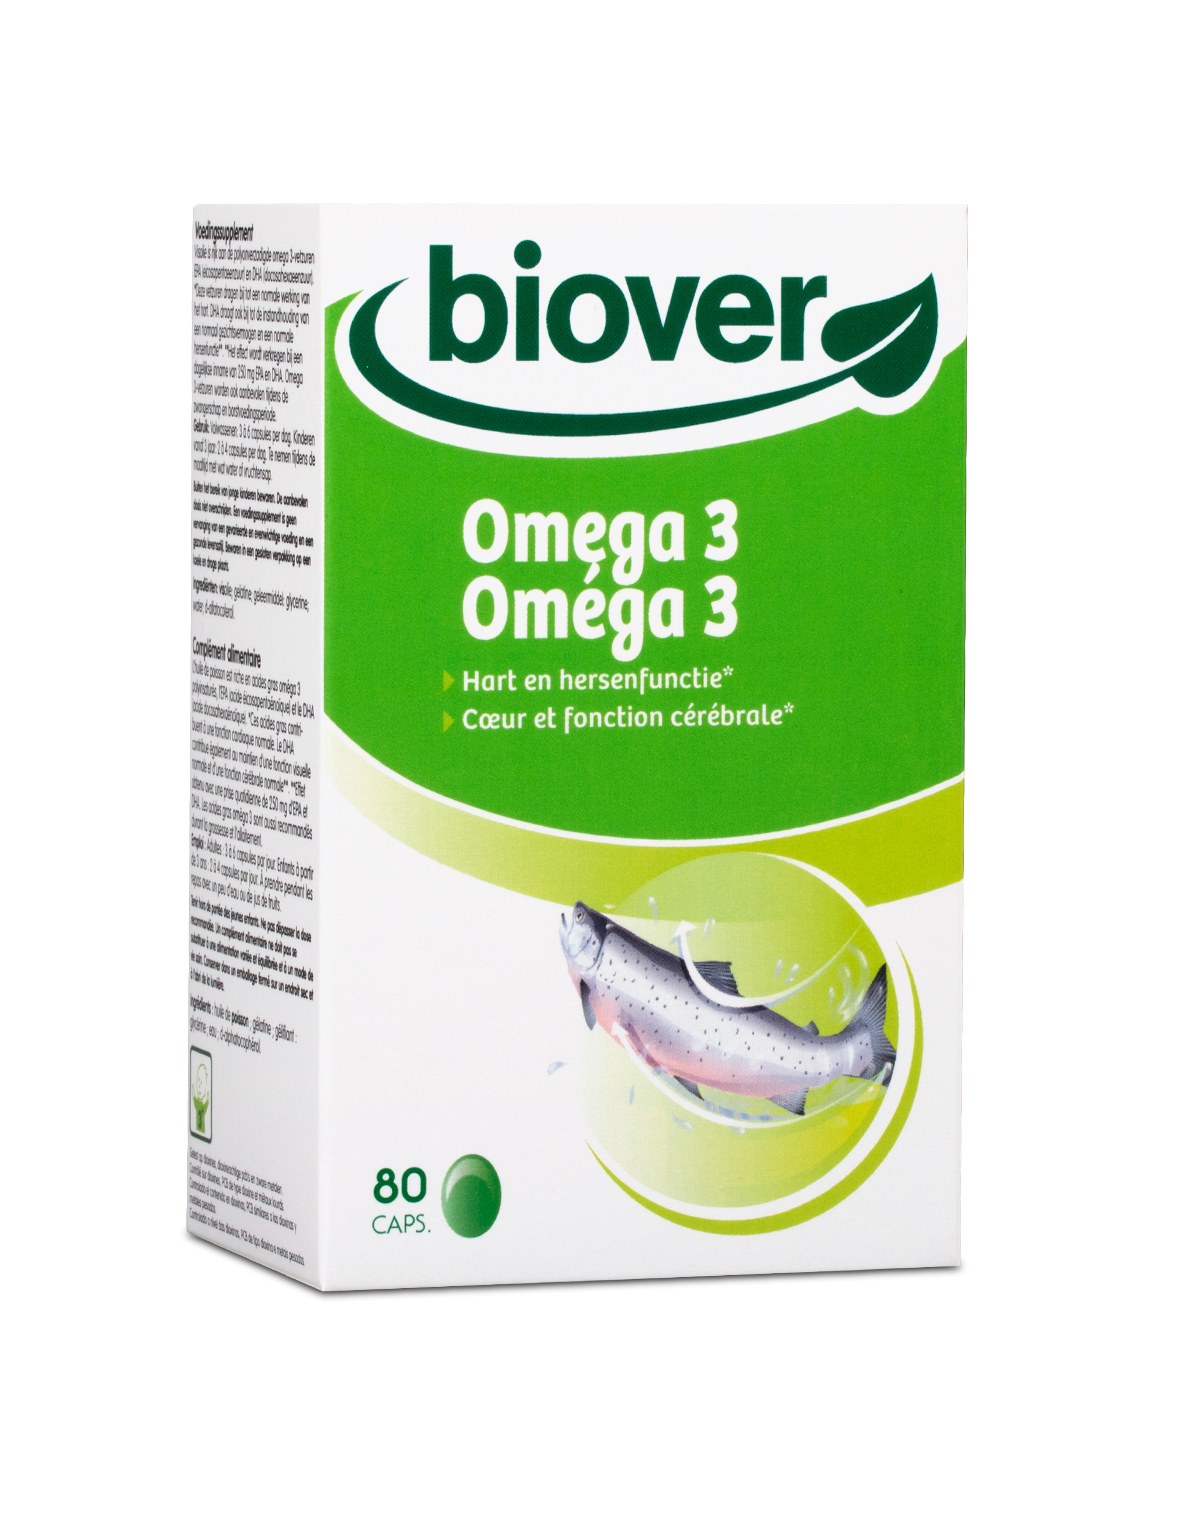 timmerman Kleverig lichten Omega 3 - Biover